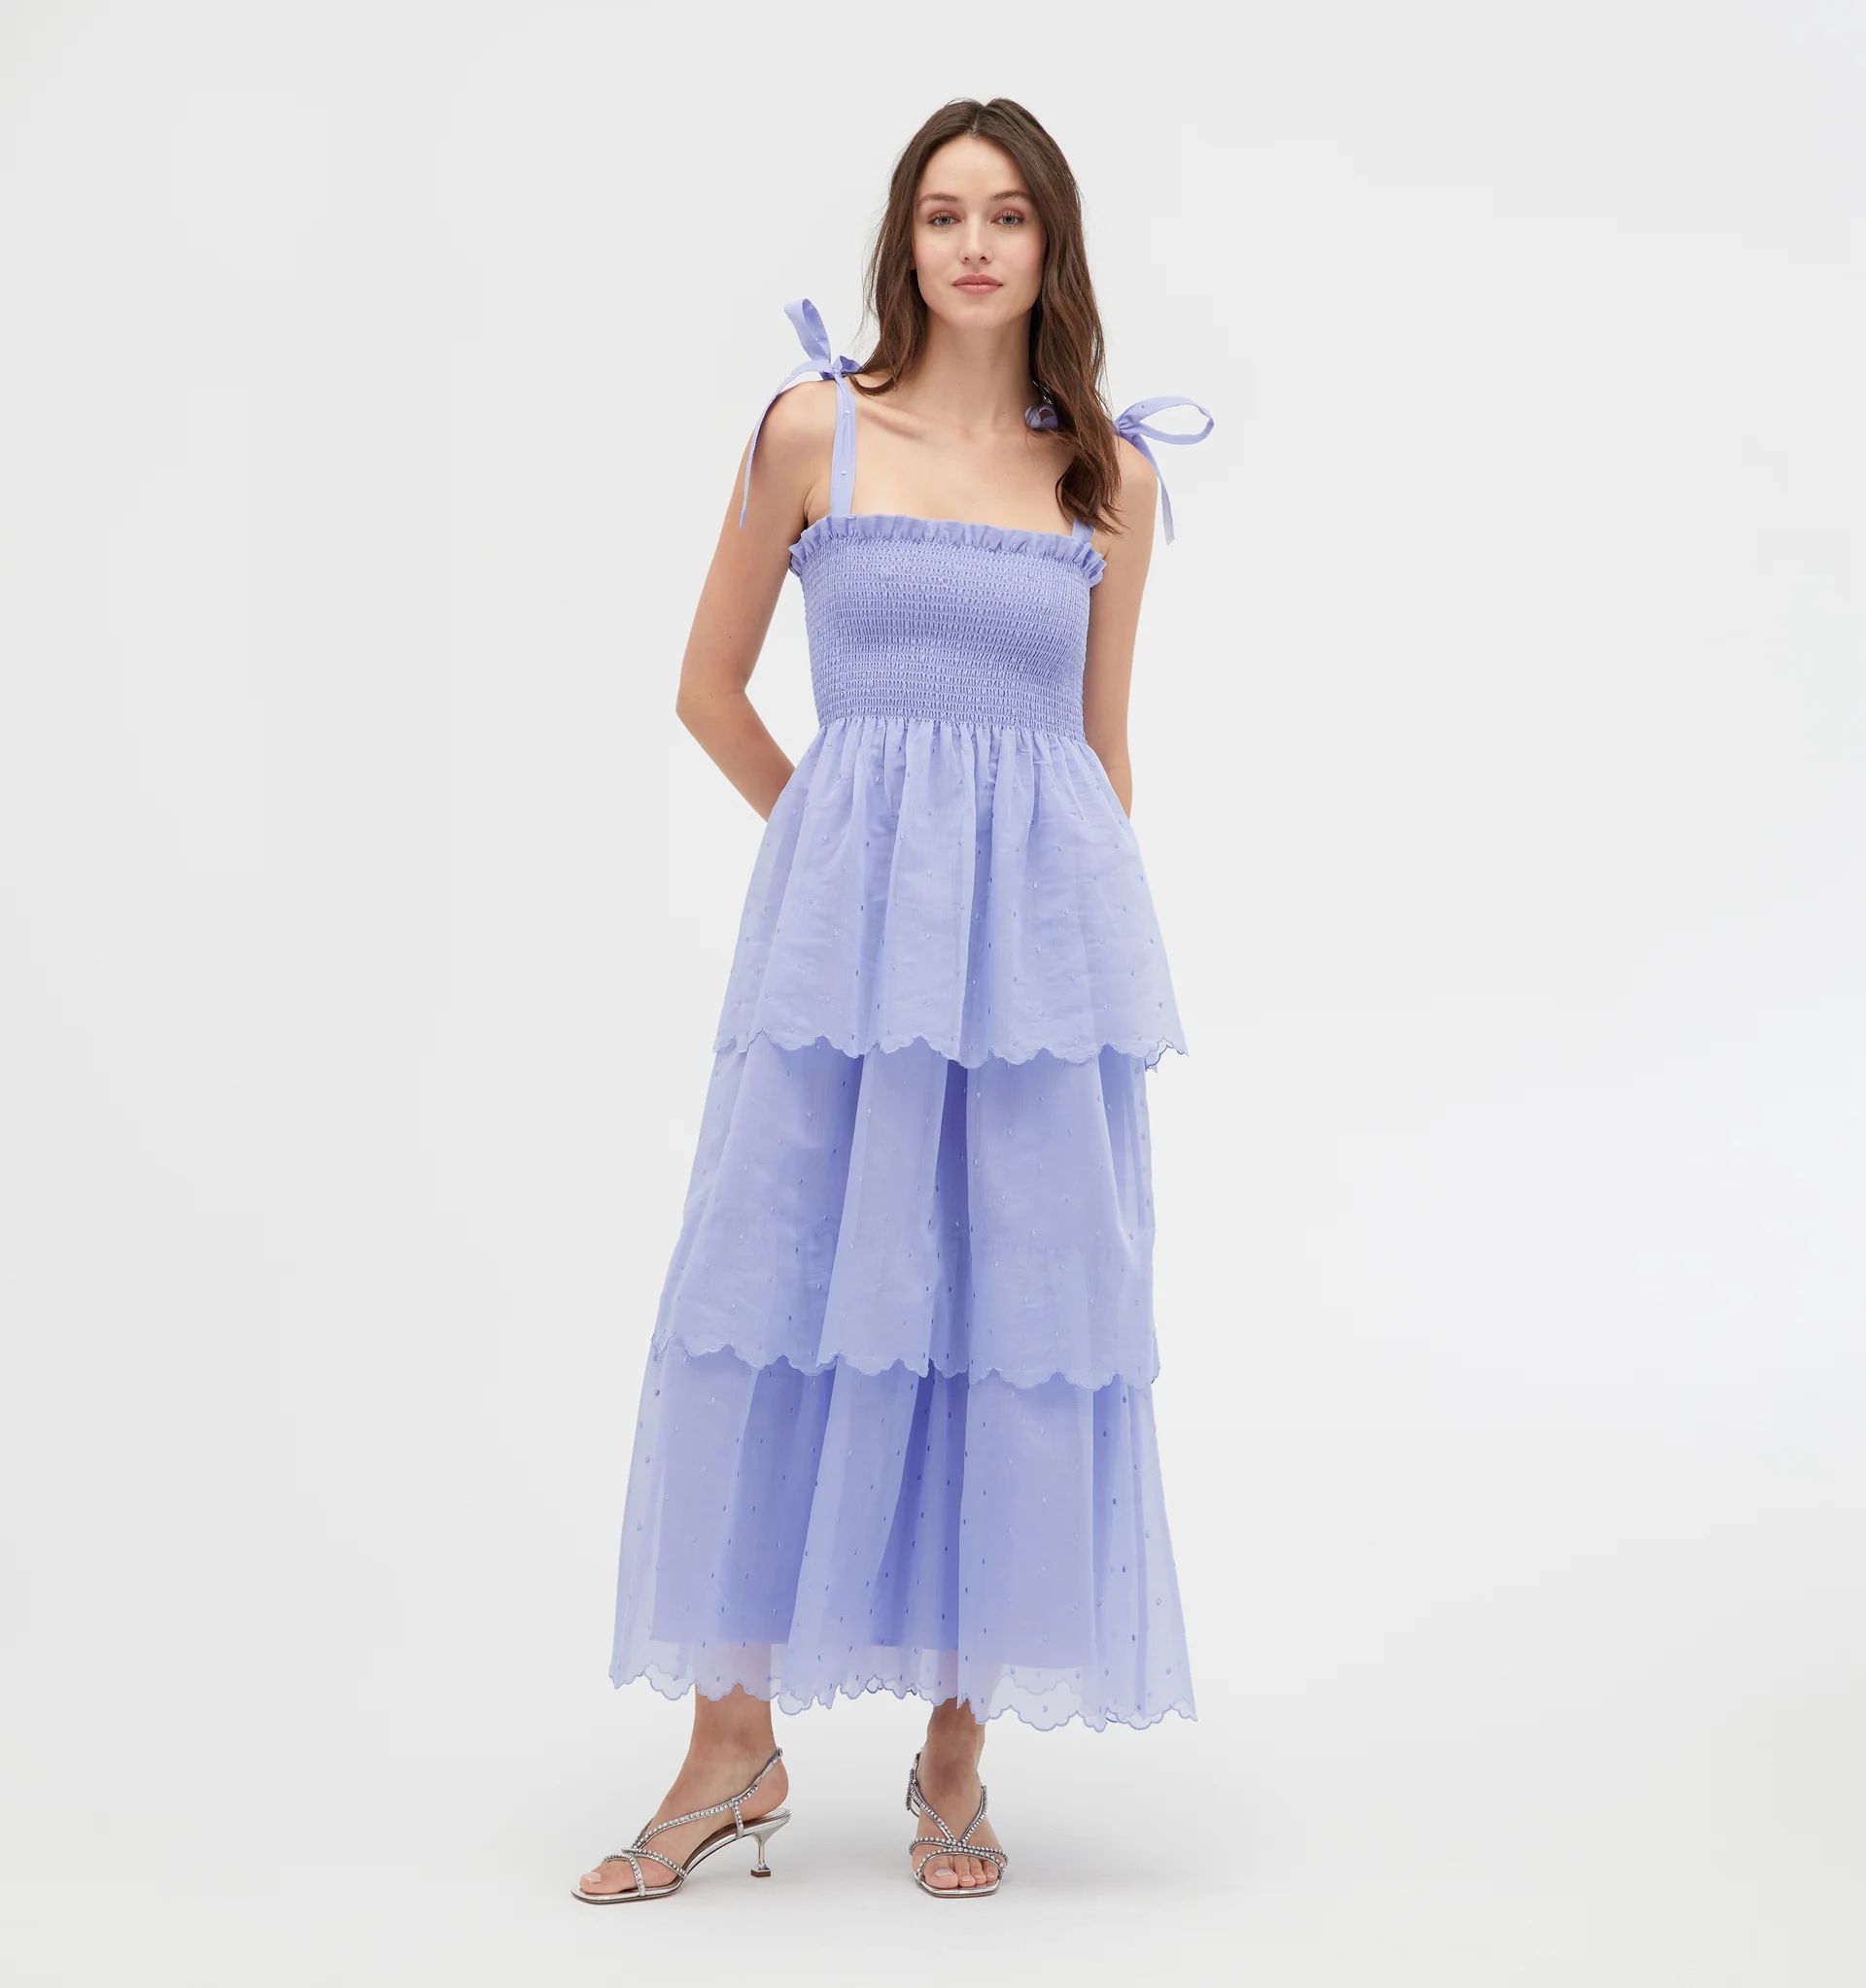 The Elise Nap Dress - Hyacinth Organza Dot | Hill House Home